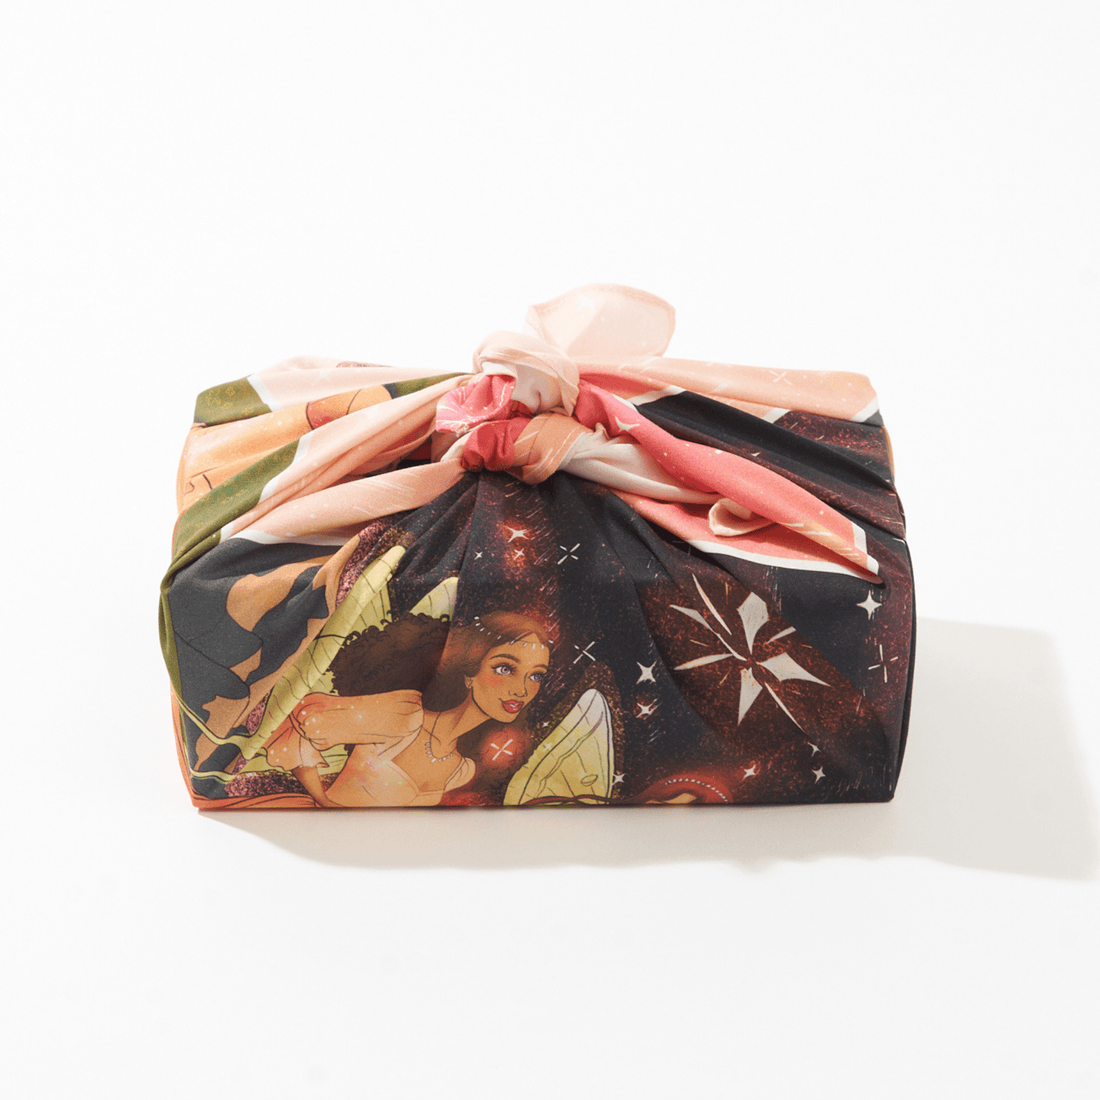 Sisterhood | 18" Furoshiki Gift Wrap by Noelle Anne Navarette - Wrappr